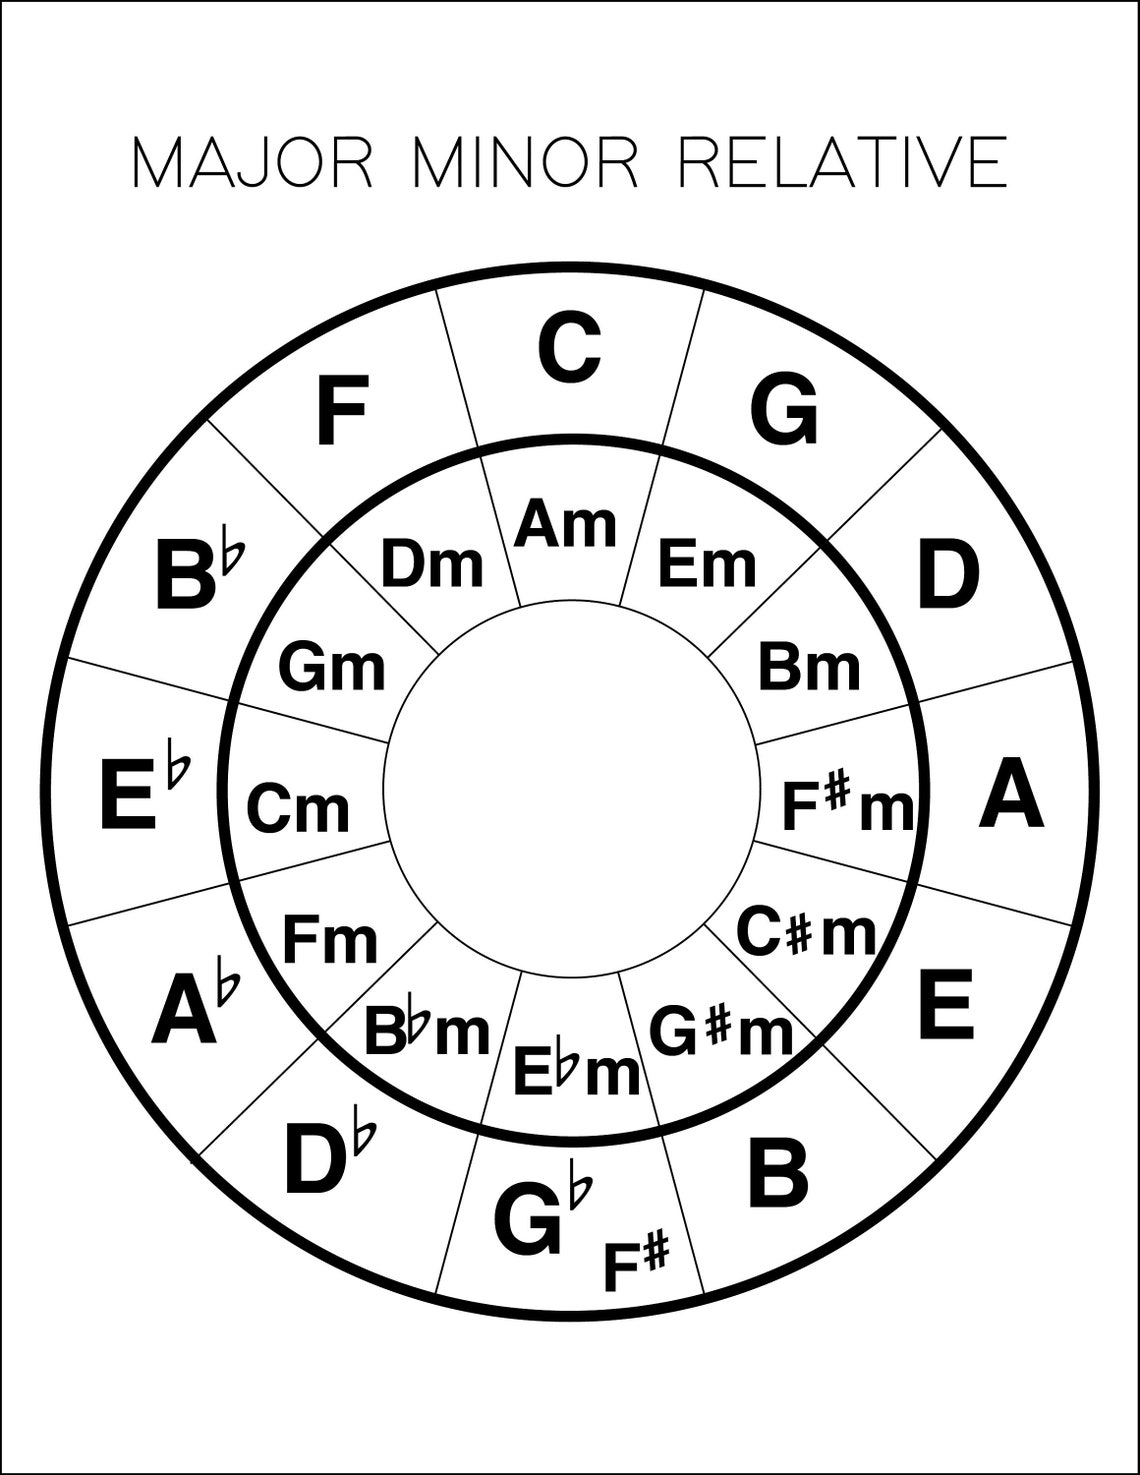 Major Minor Relative Chart Instant Printable Download | Etsy